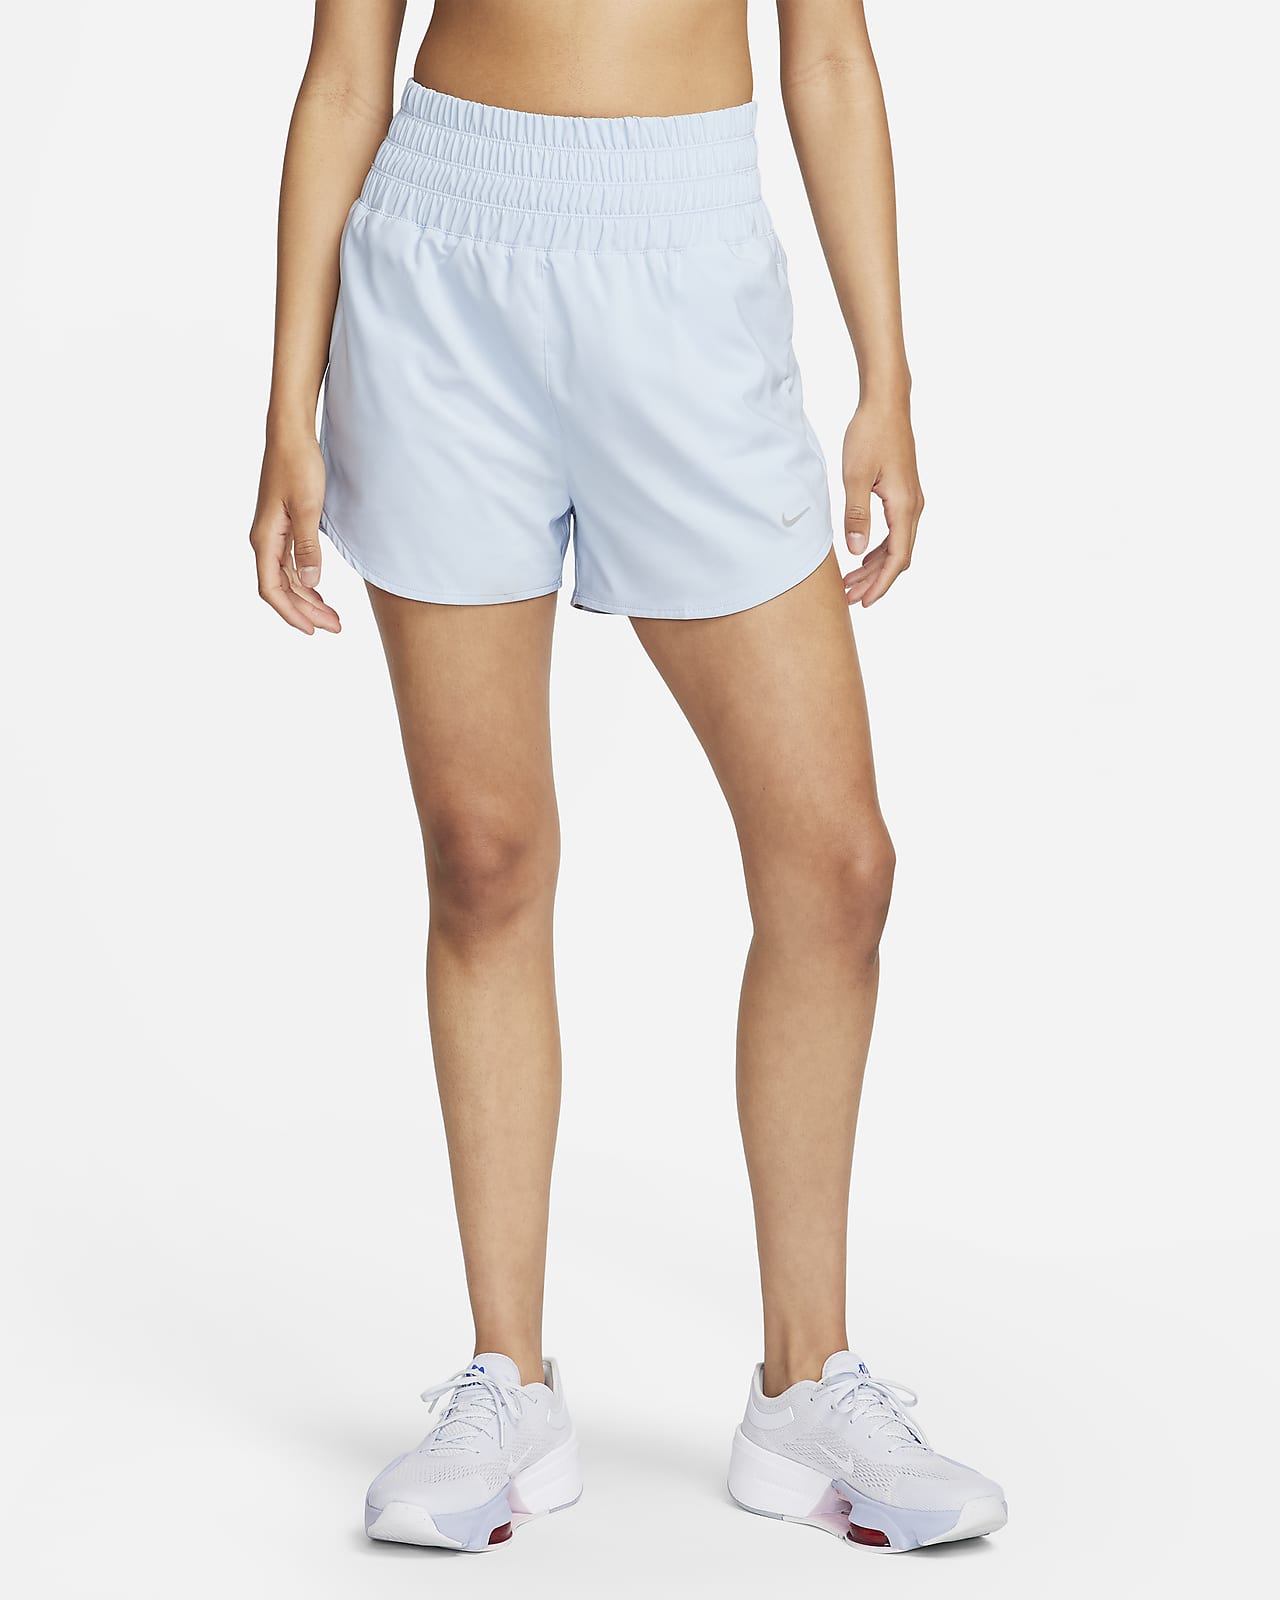 Nike Women's Dri-FIT One Ultra High-Waisted Pants - Macy's